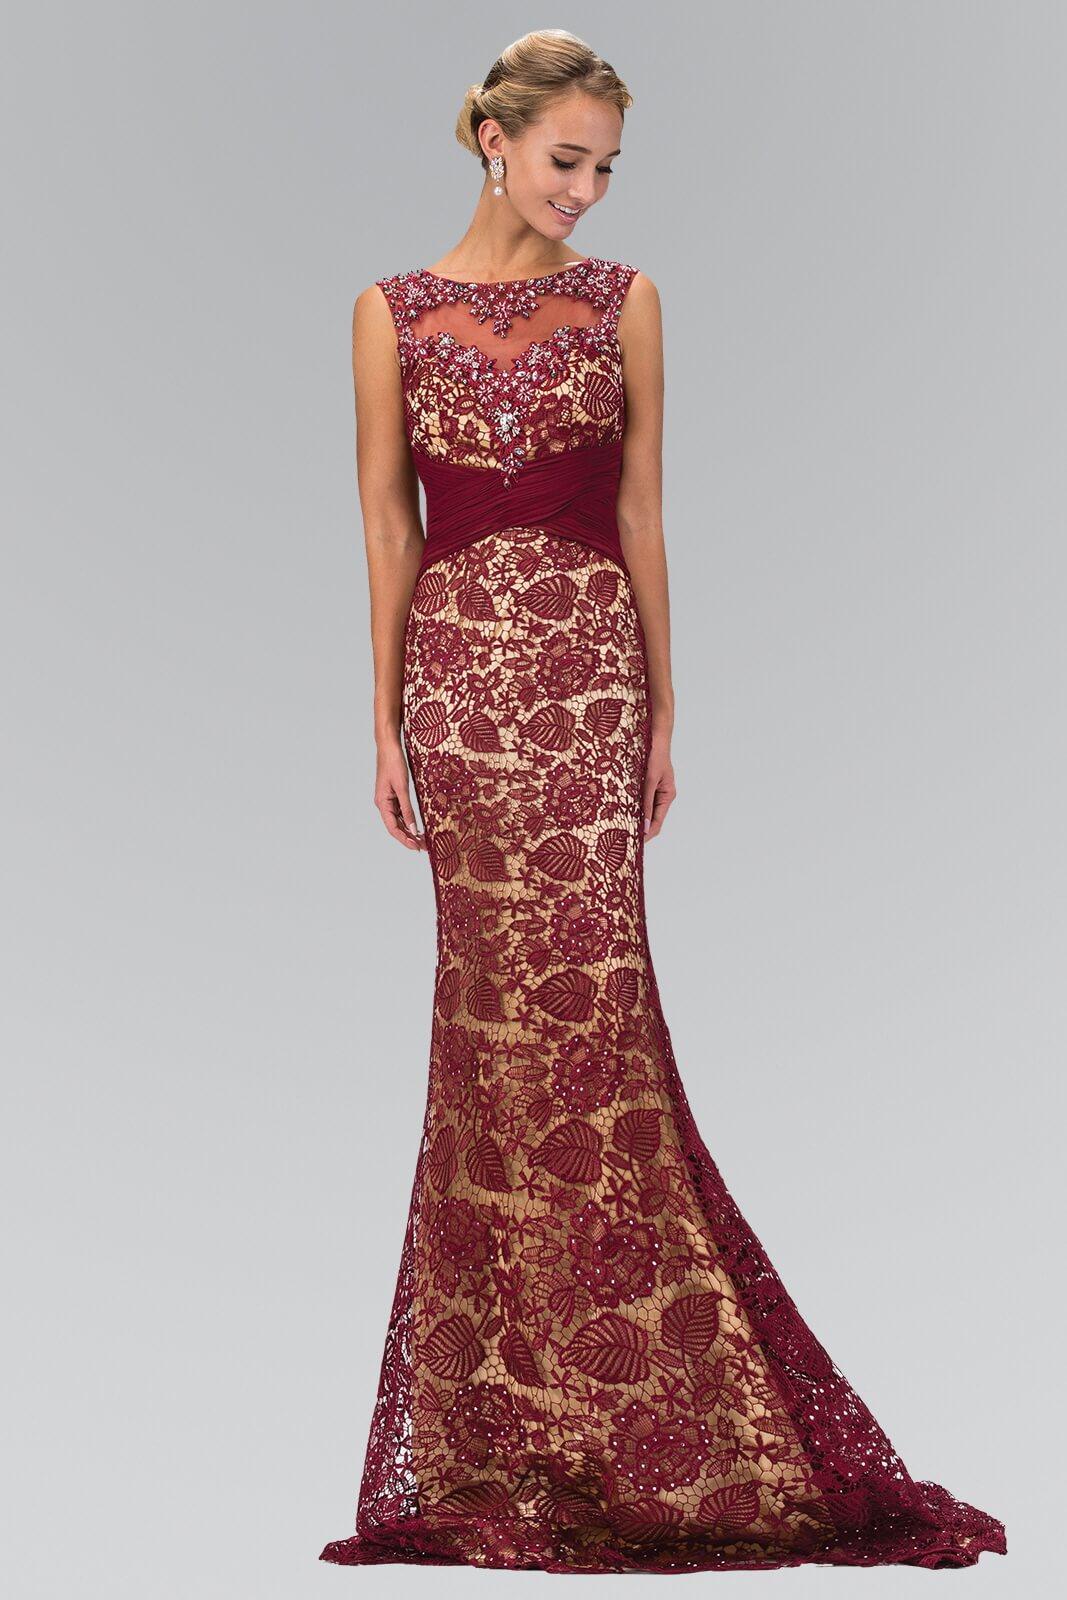 Lace Prom Long Dress Evening Gown - The Dress Outlet Elizabeth K